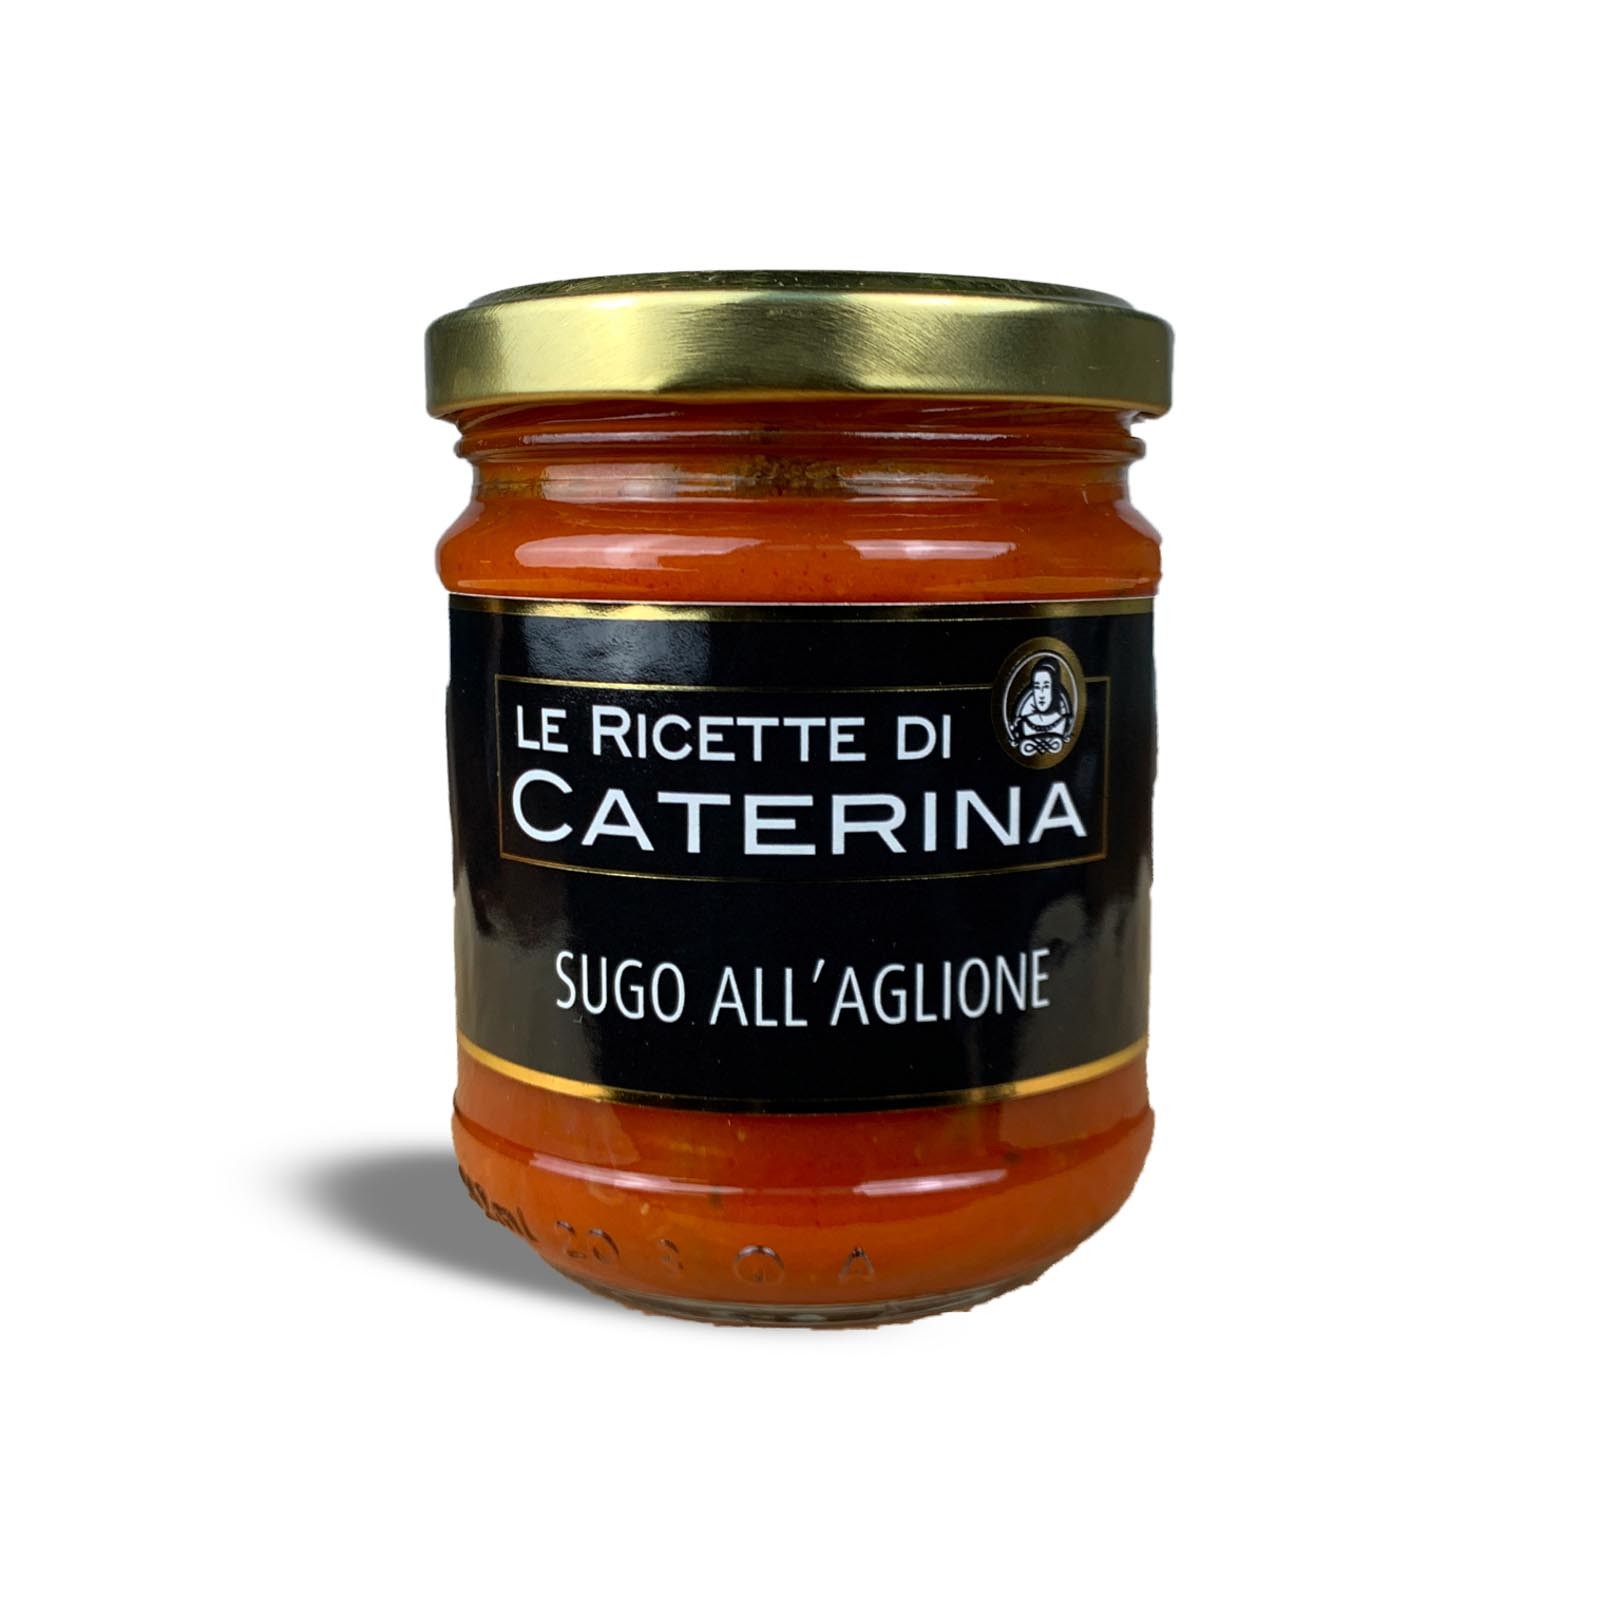 Pasta sauce with tomato and garlic, the typical garlic of the Valdichiana.